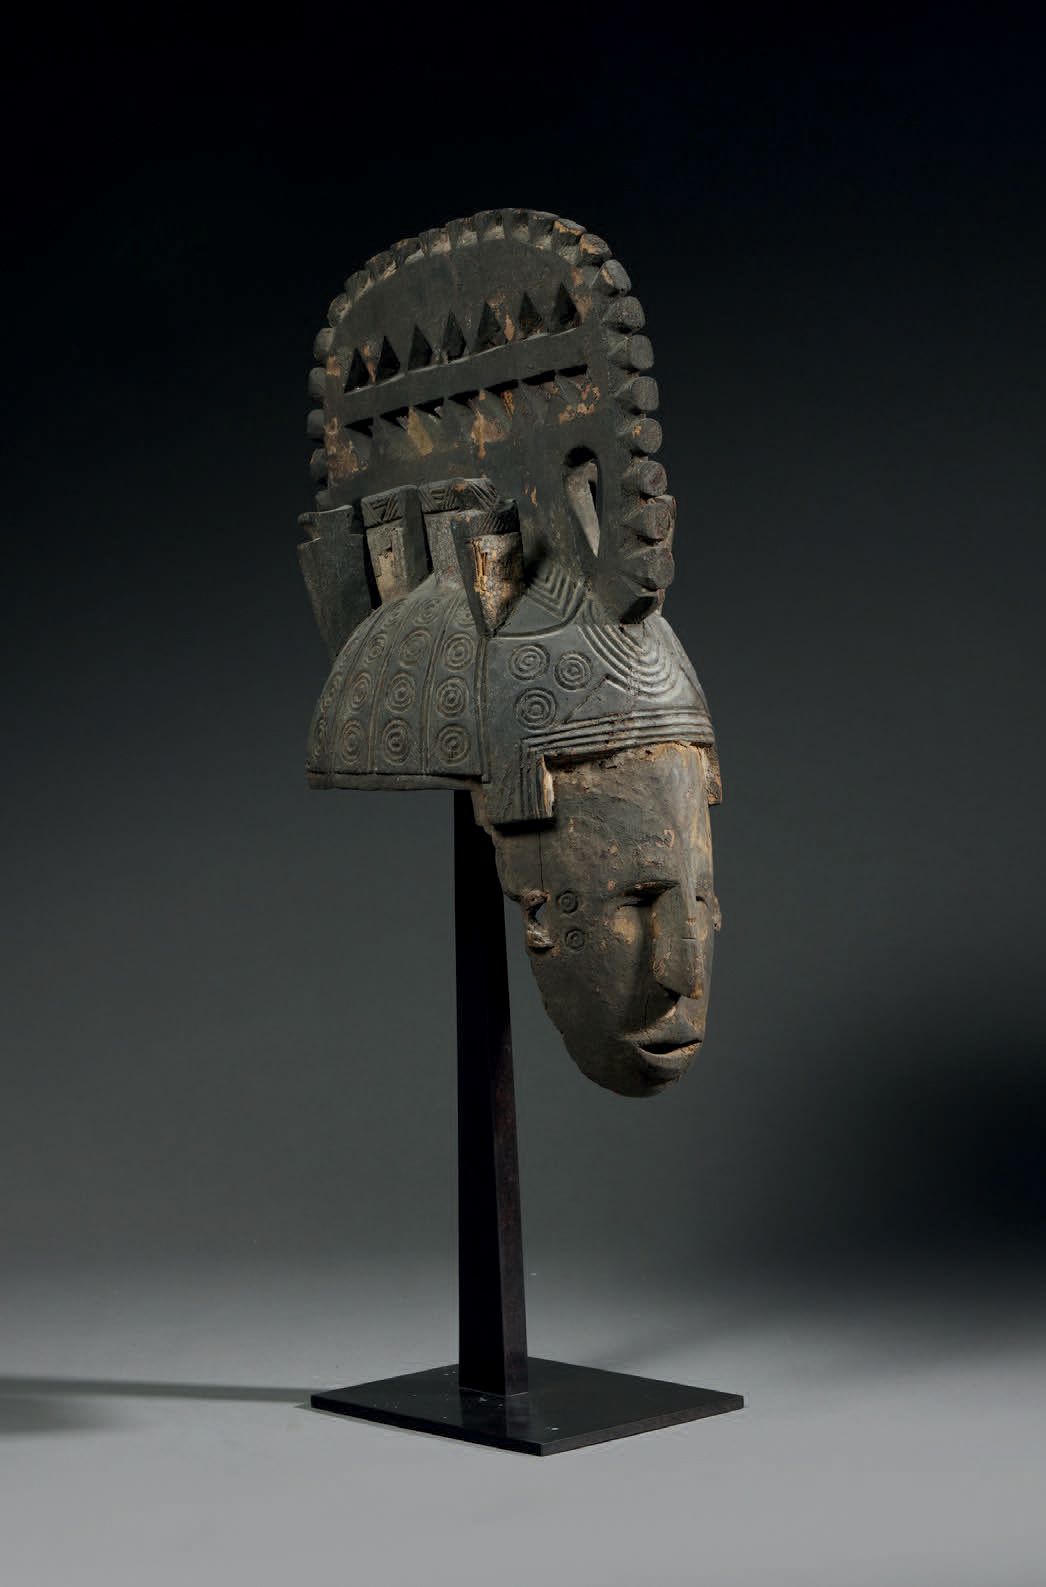 Null Máscara Igbo Mmwo
Nigeria
Madera
H. 45 cm
Máscara-heal que representa un ro&hellip;